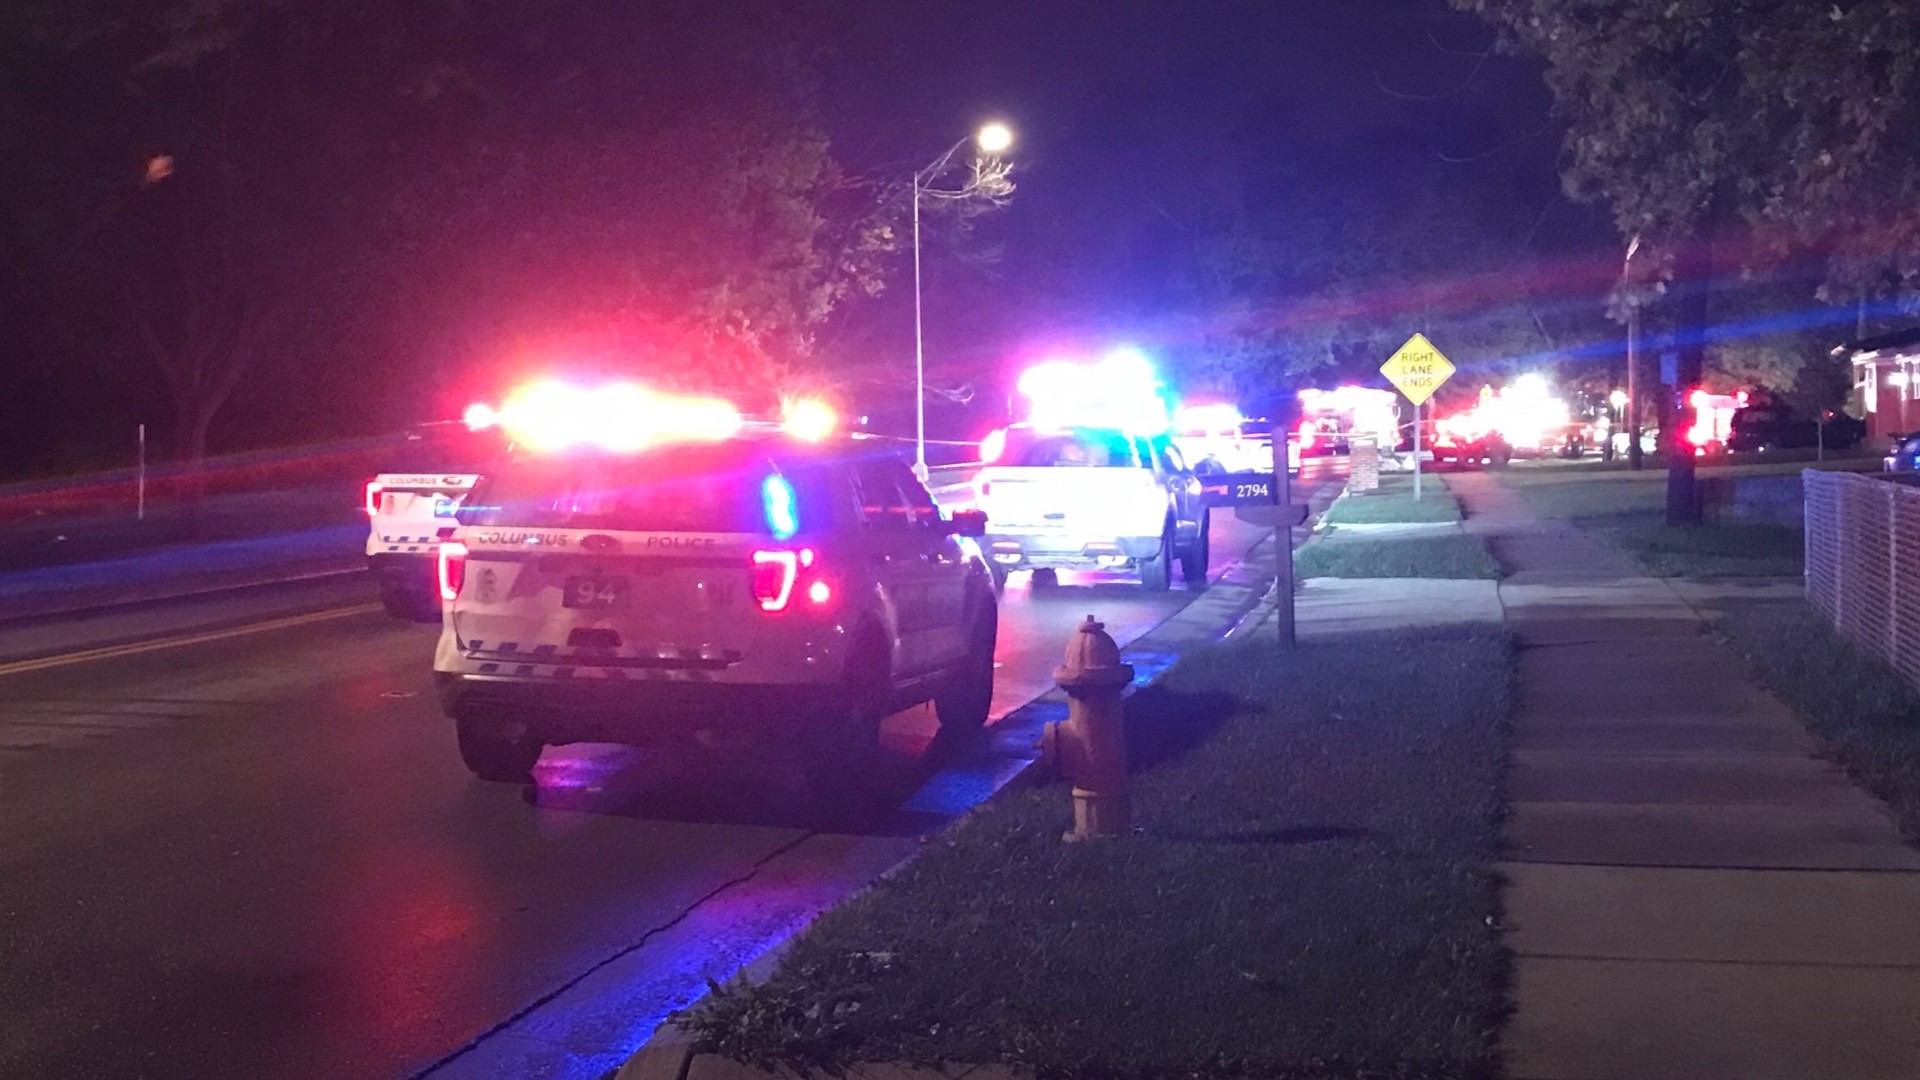 Columbus police said the crash happened around 10:30 p.m. in the 2700 block of Noe Bixby Road.